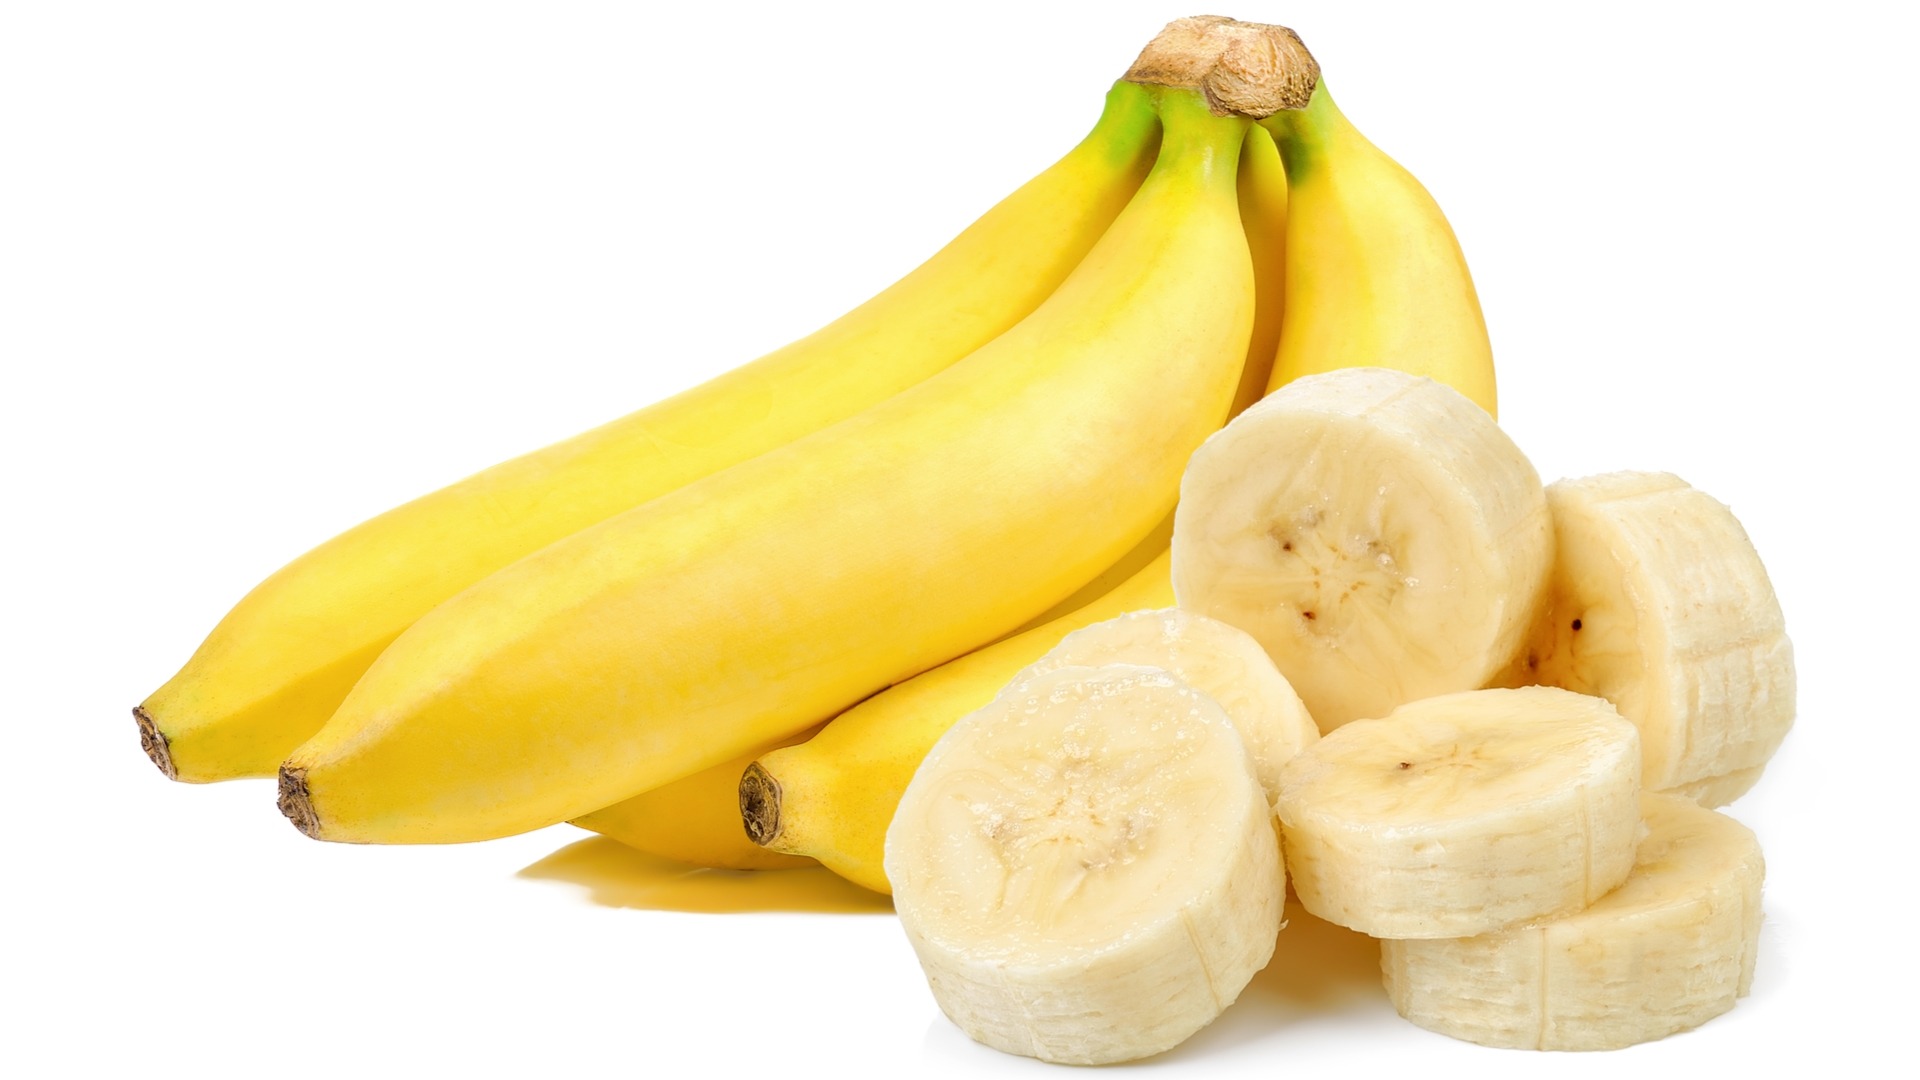 is banana a fruit